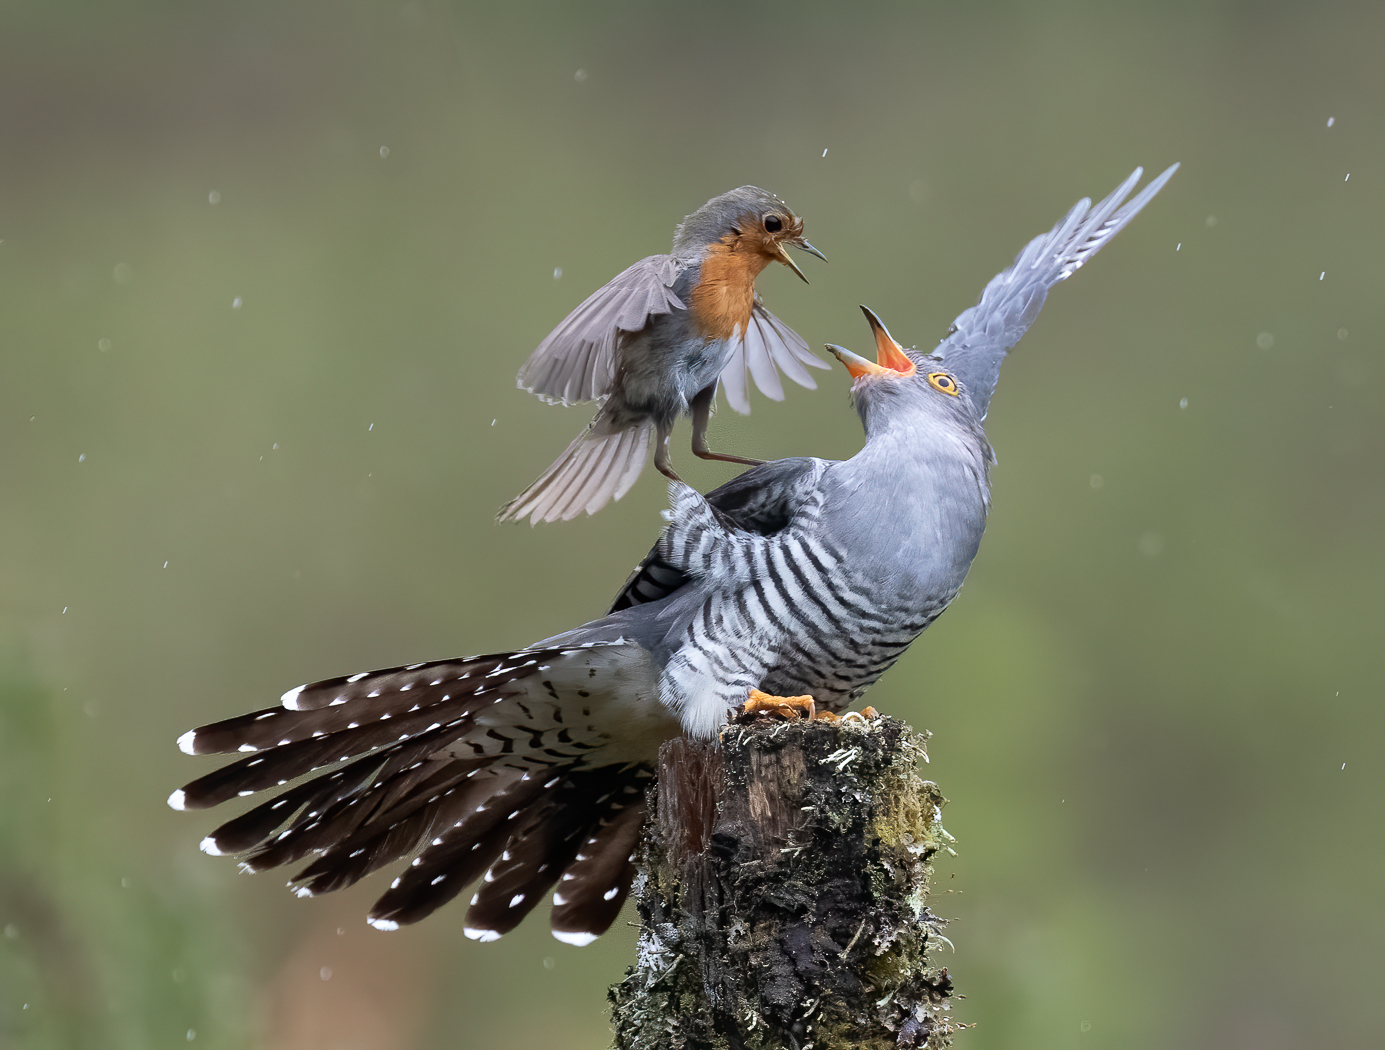 Cuckoo vs Robin by Iain McFadyen LRPS